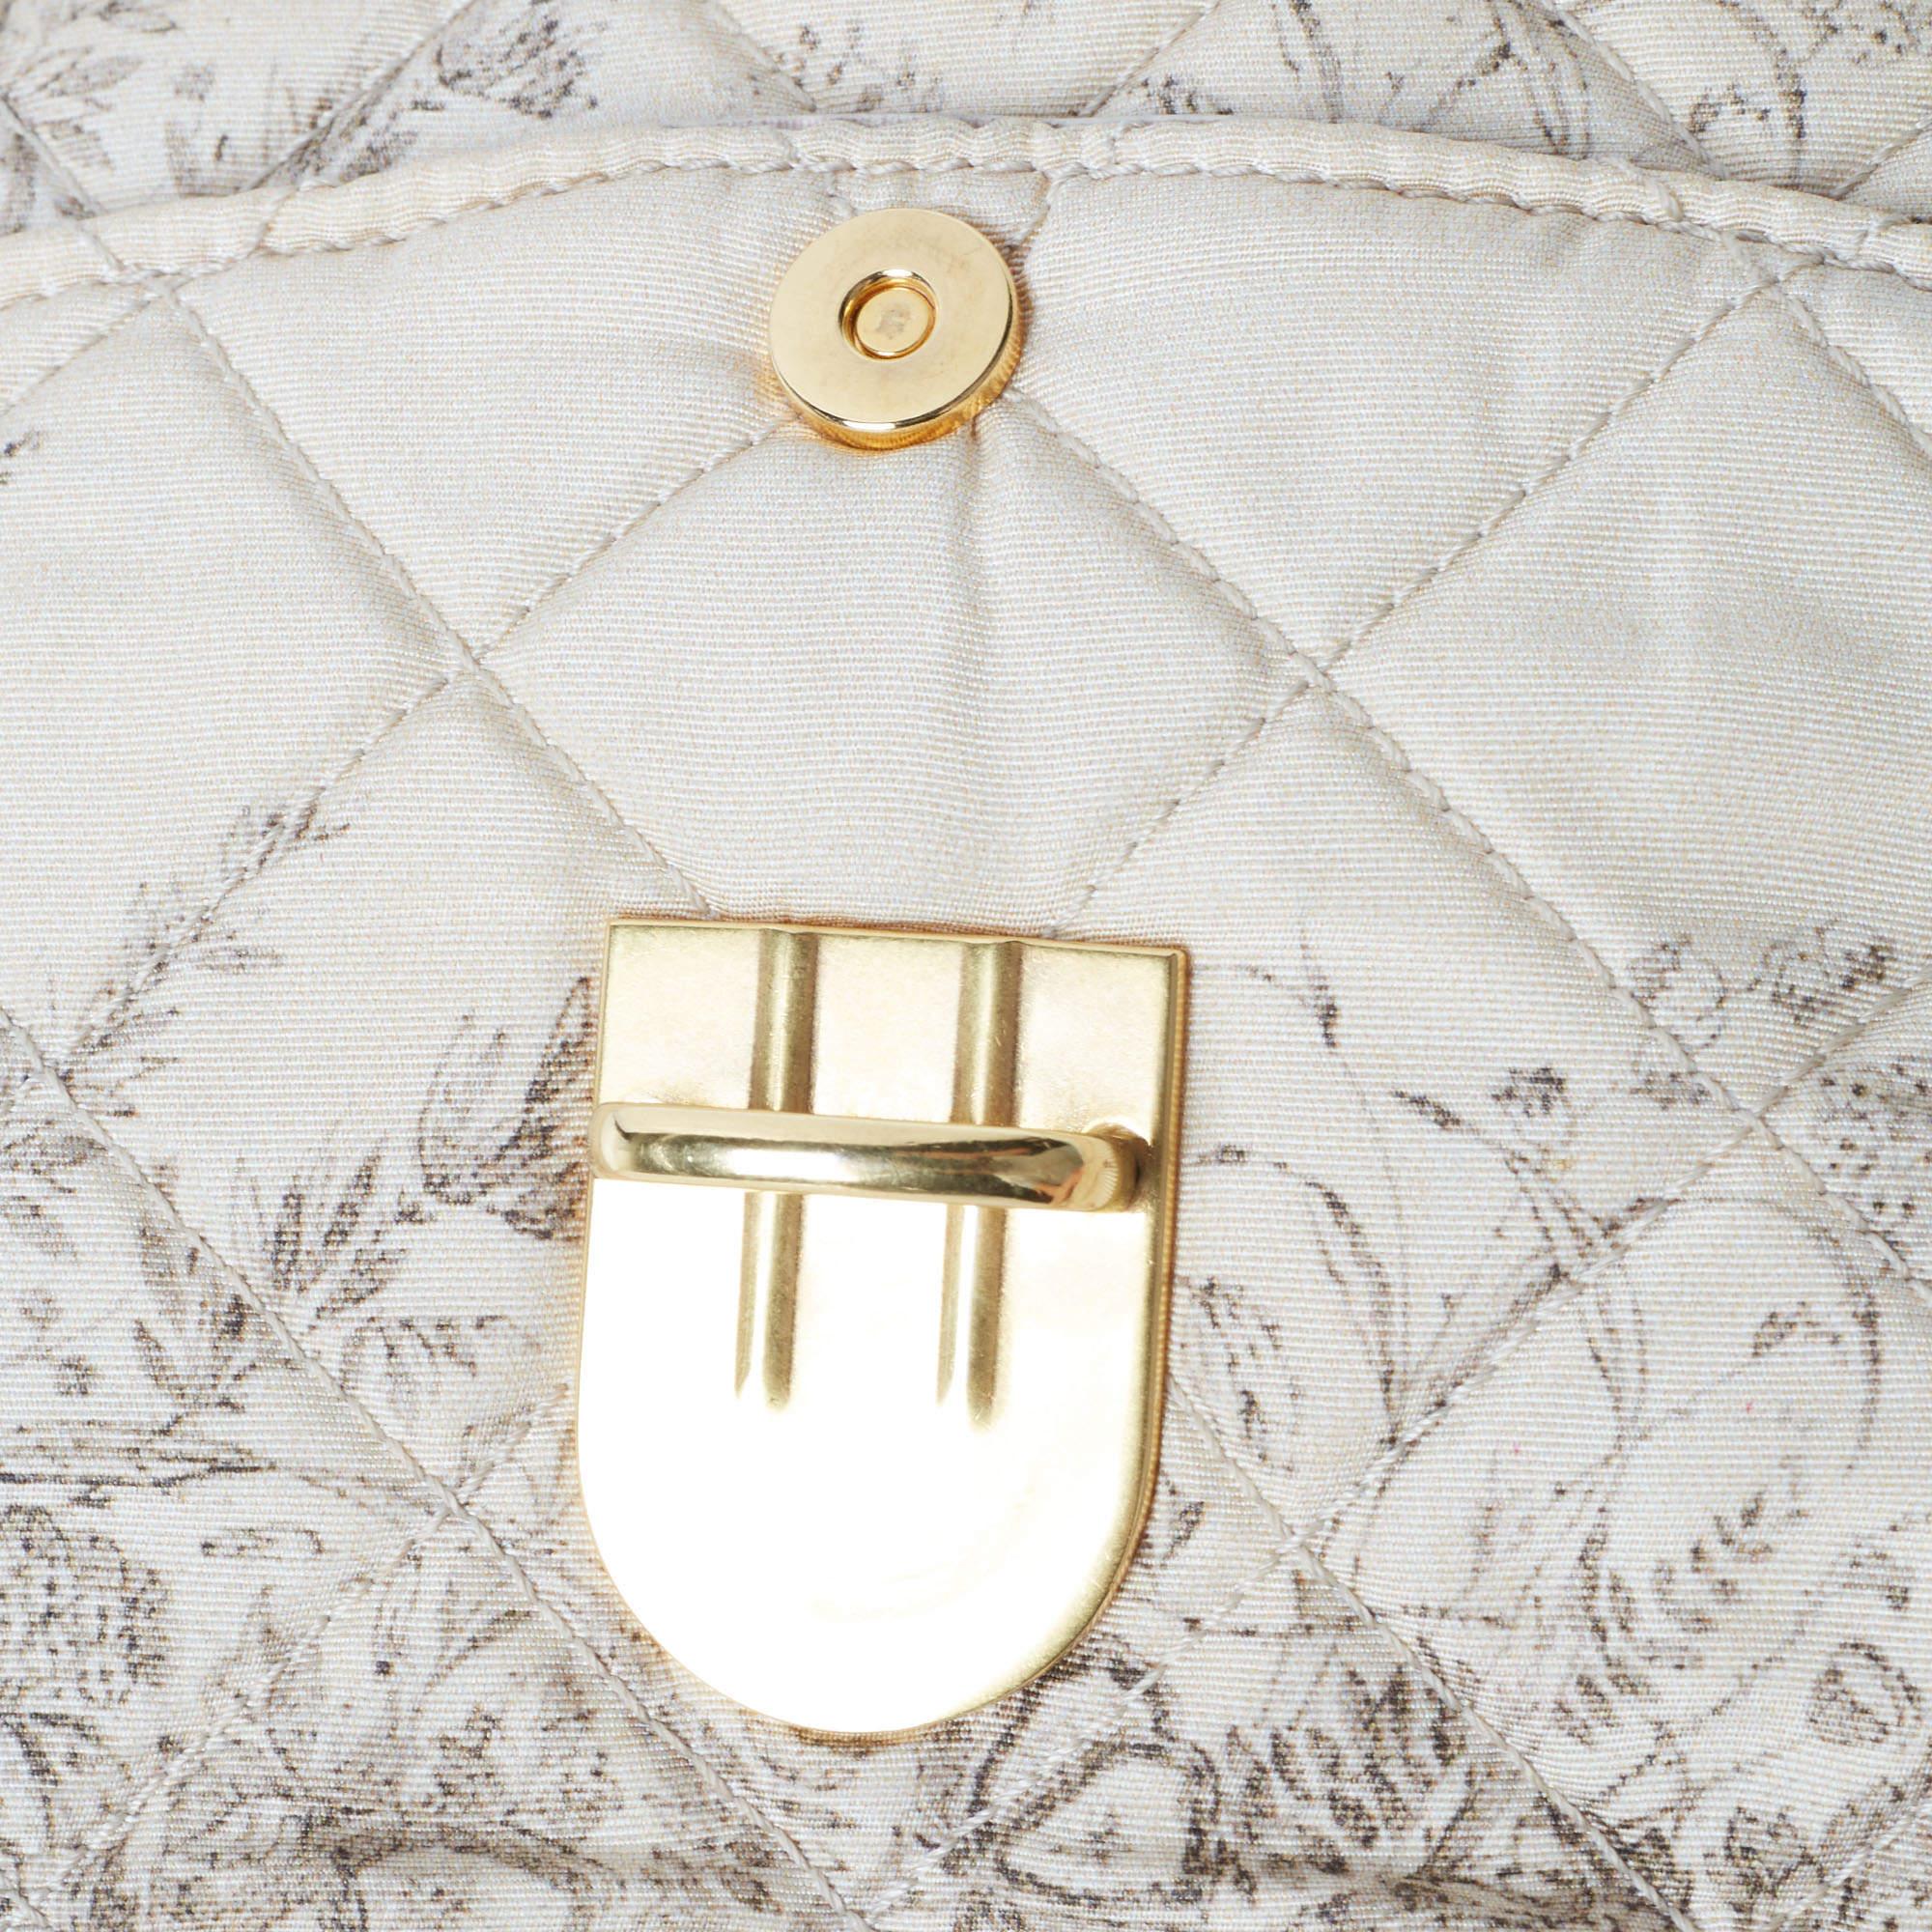 Prada Beige Floral Print Quilted Satin Flap Chain Bag 3